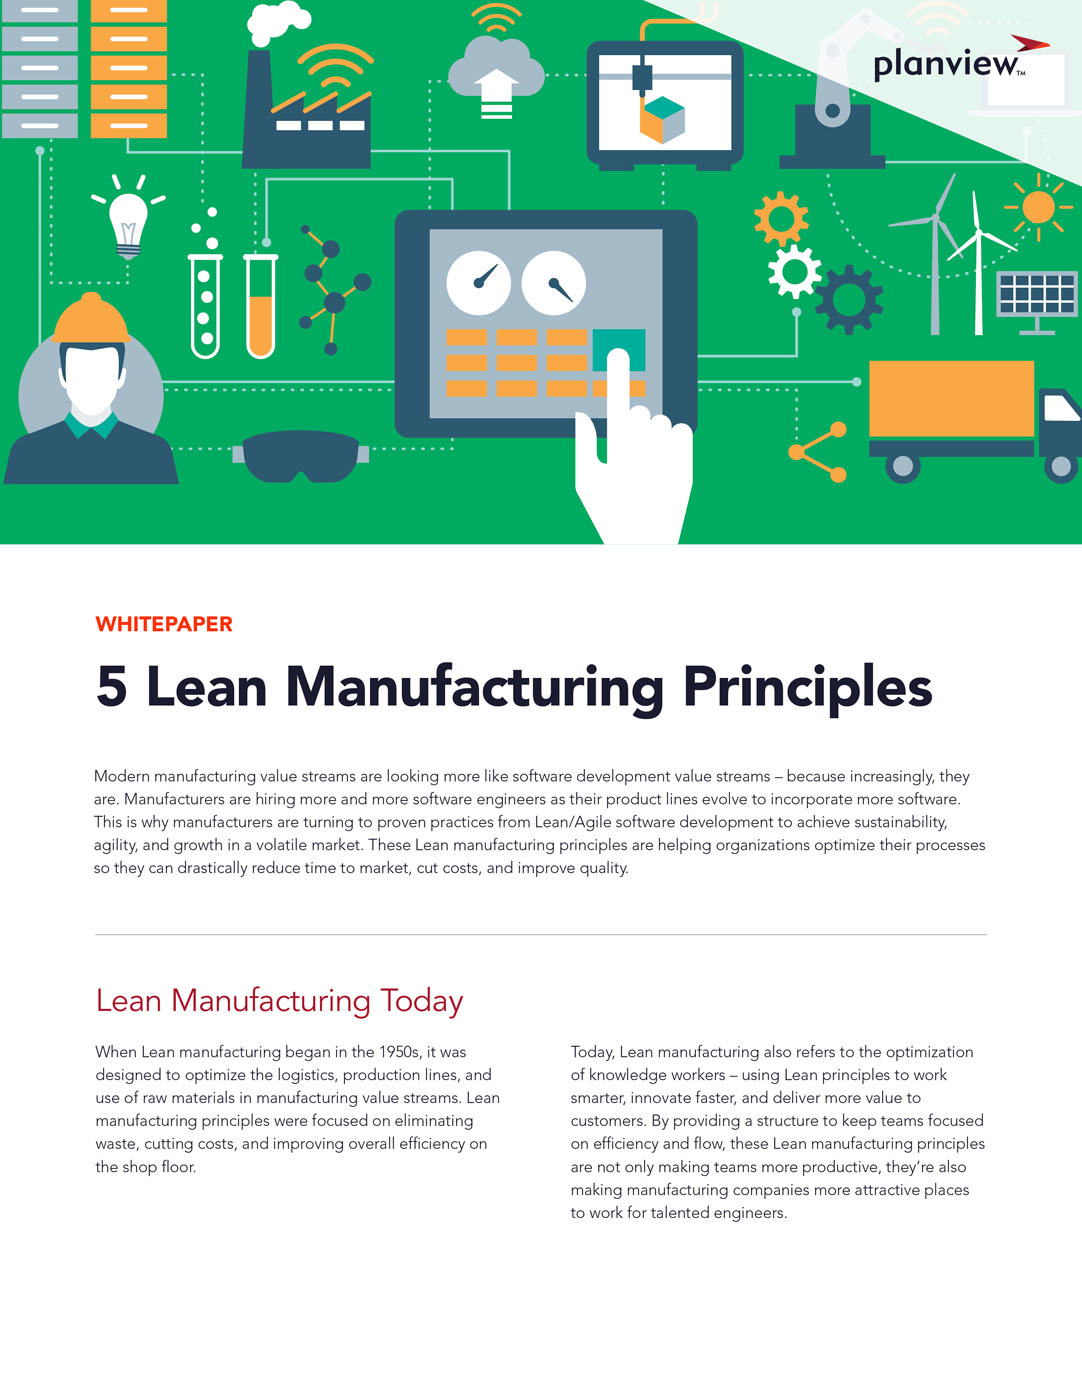 5 Lean Manufacturing Principles